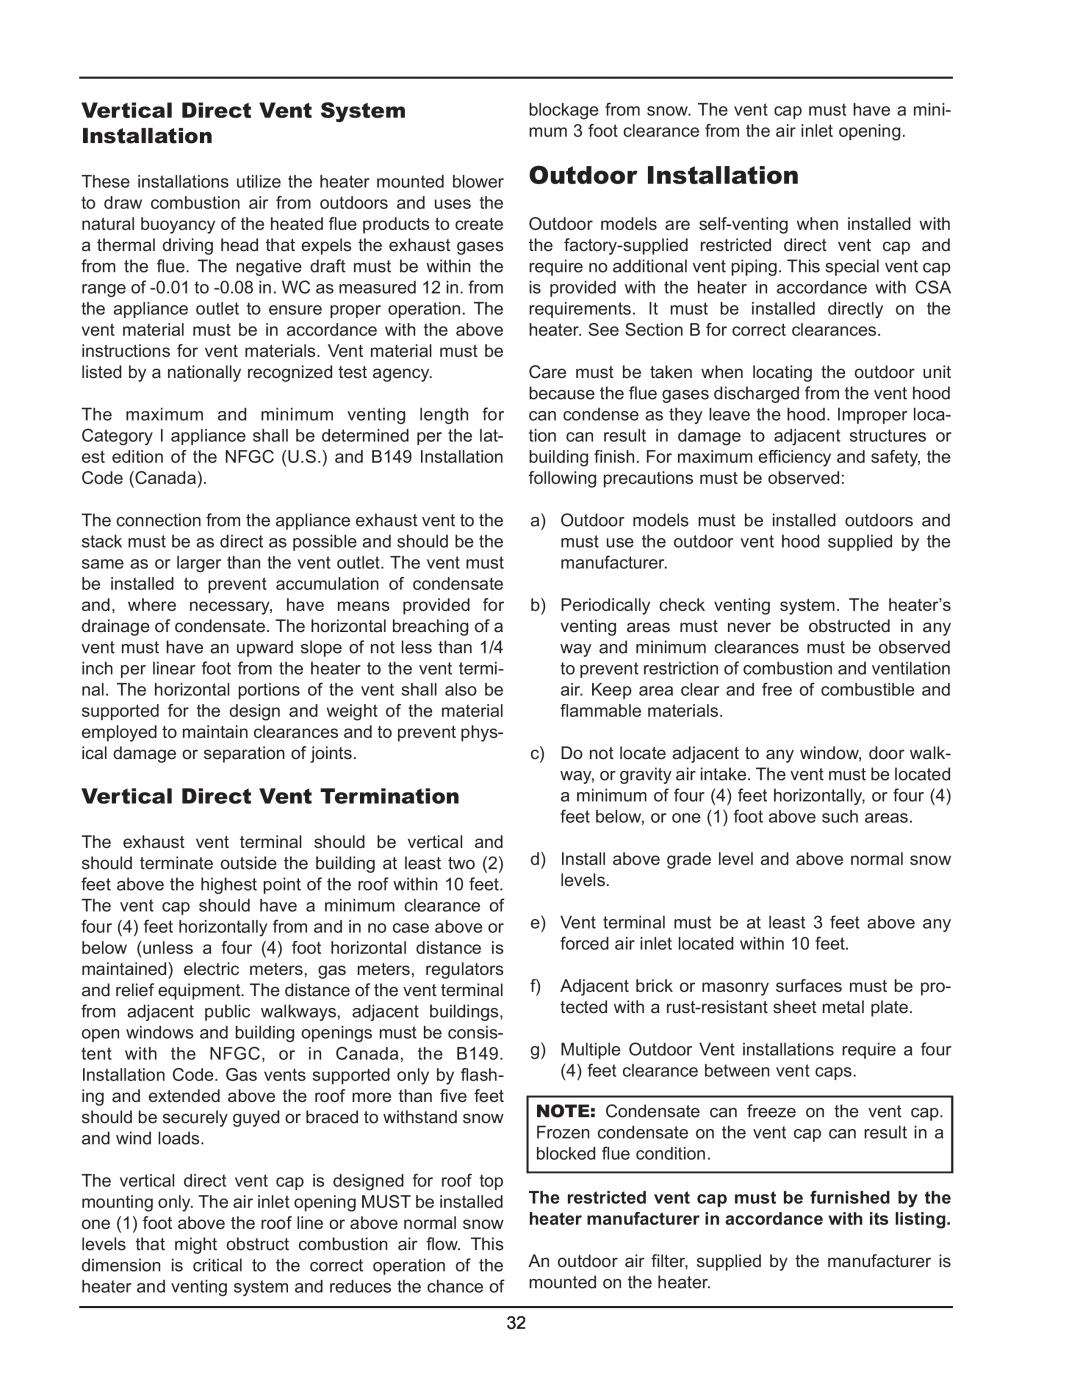 Raypak 122-322 manual Outdoor Installation, Vertical Direct Vent System Installation, Vertical Direct Vent Termination 